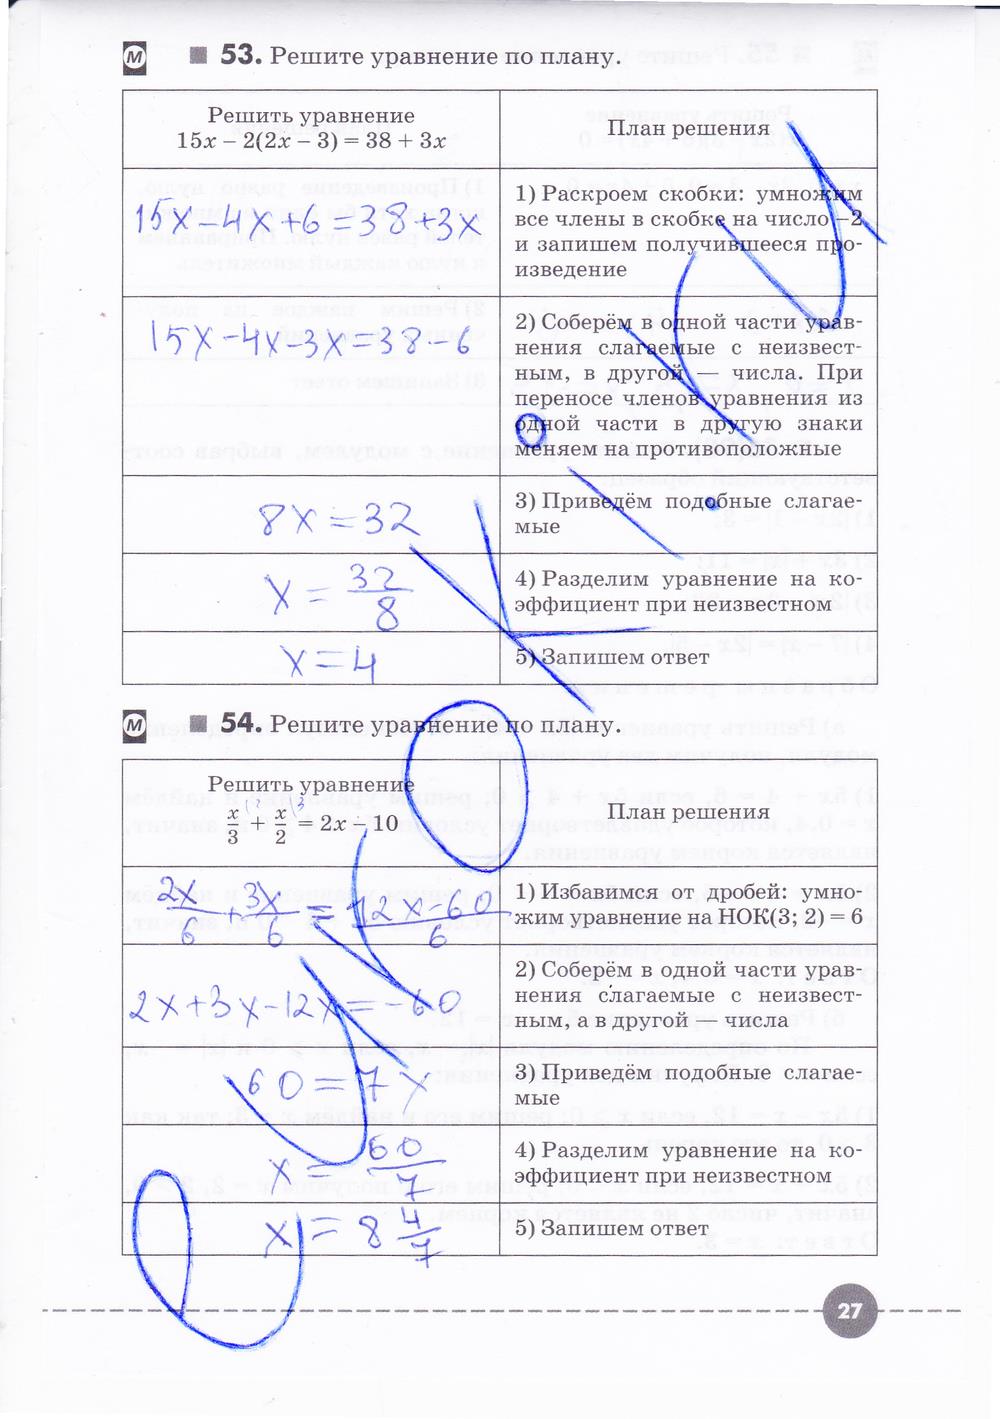 гдз 7 класс рабочая тетрадь часть 1 страница 27 алгебра Муравин, Муравина